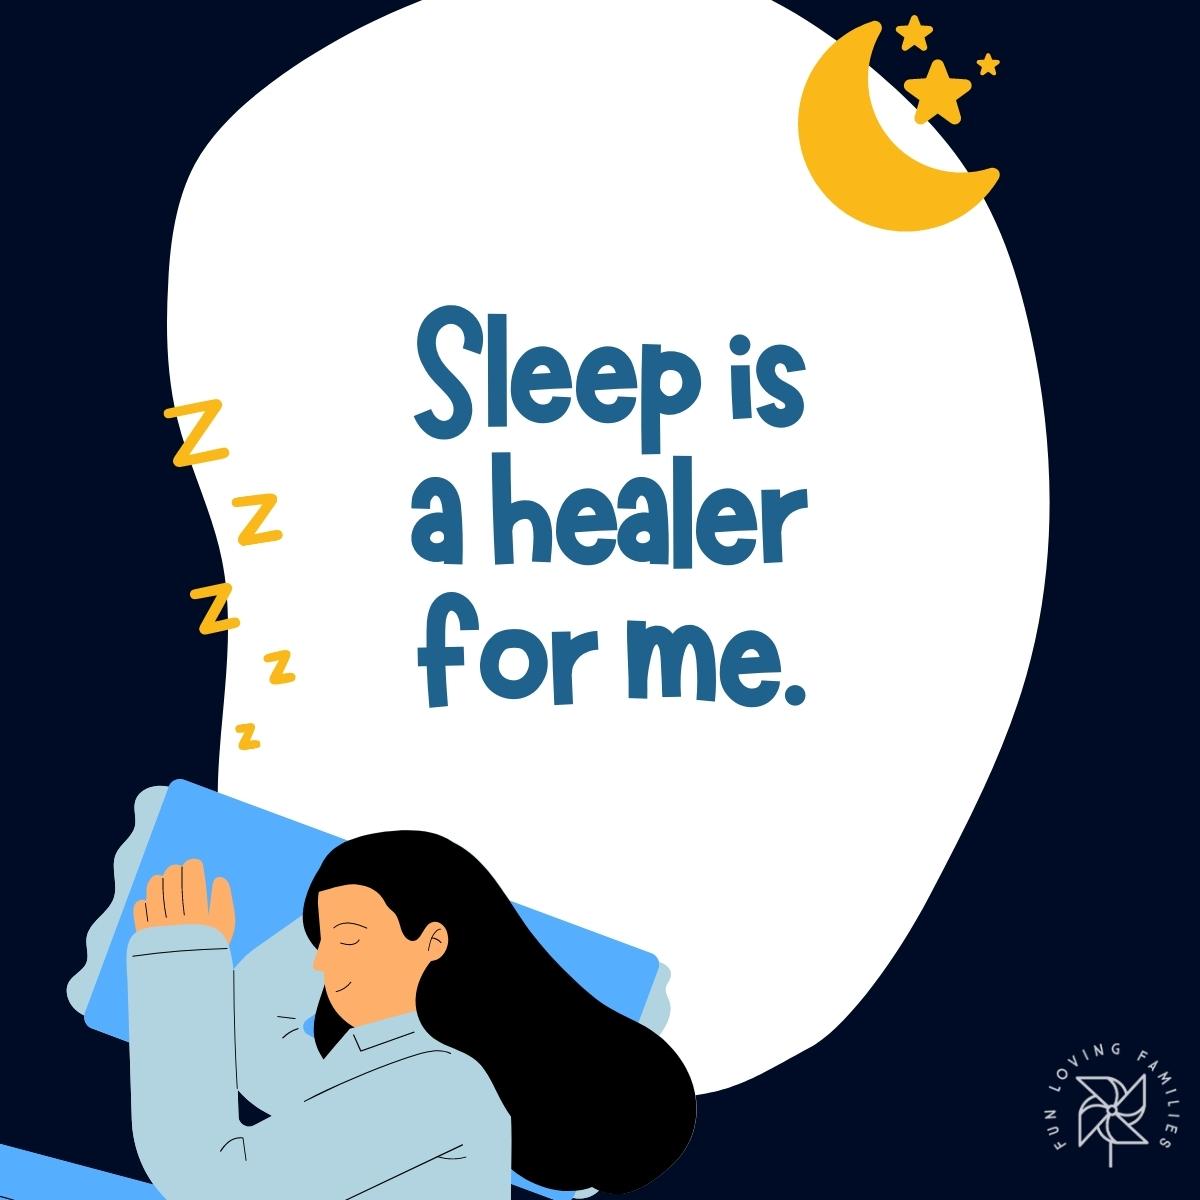 Sleep is a healer for me affirmation